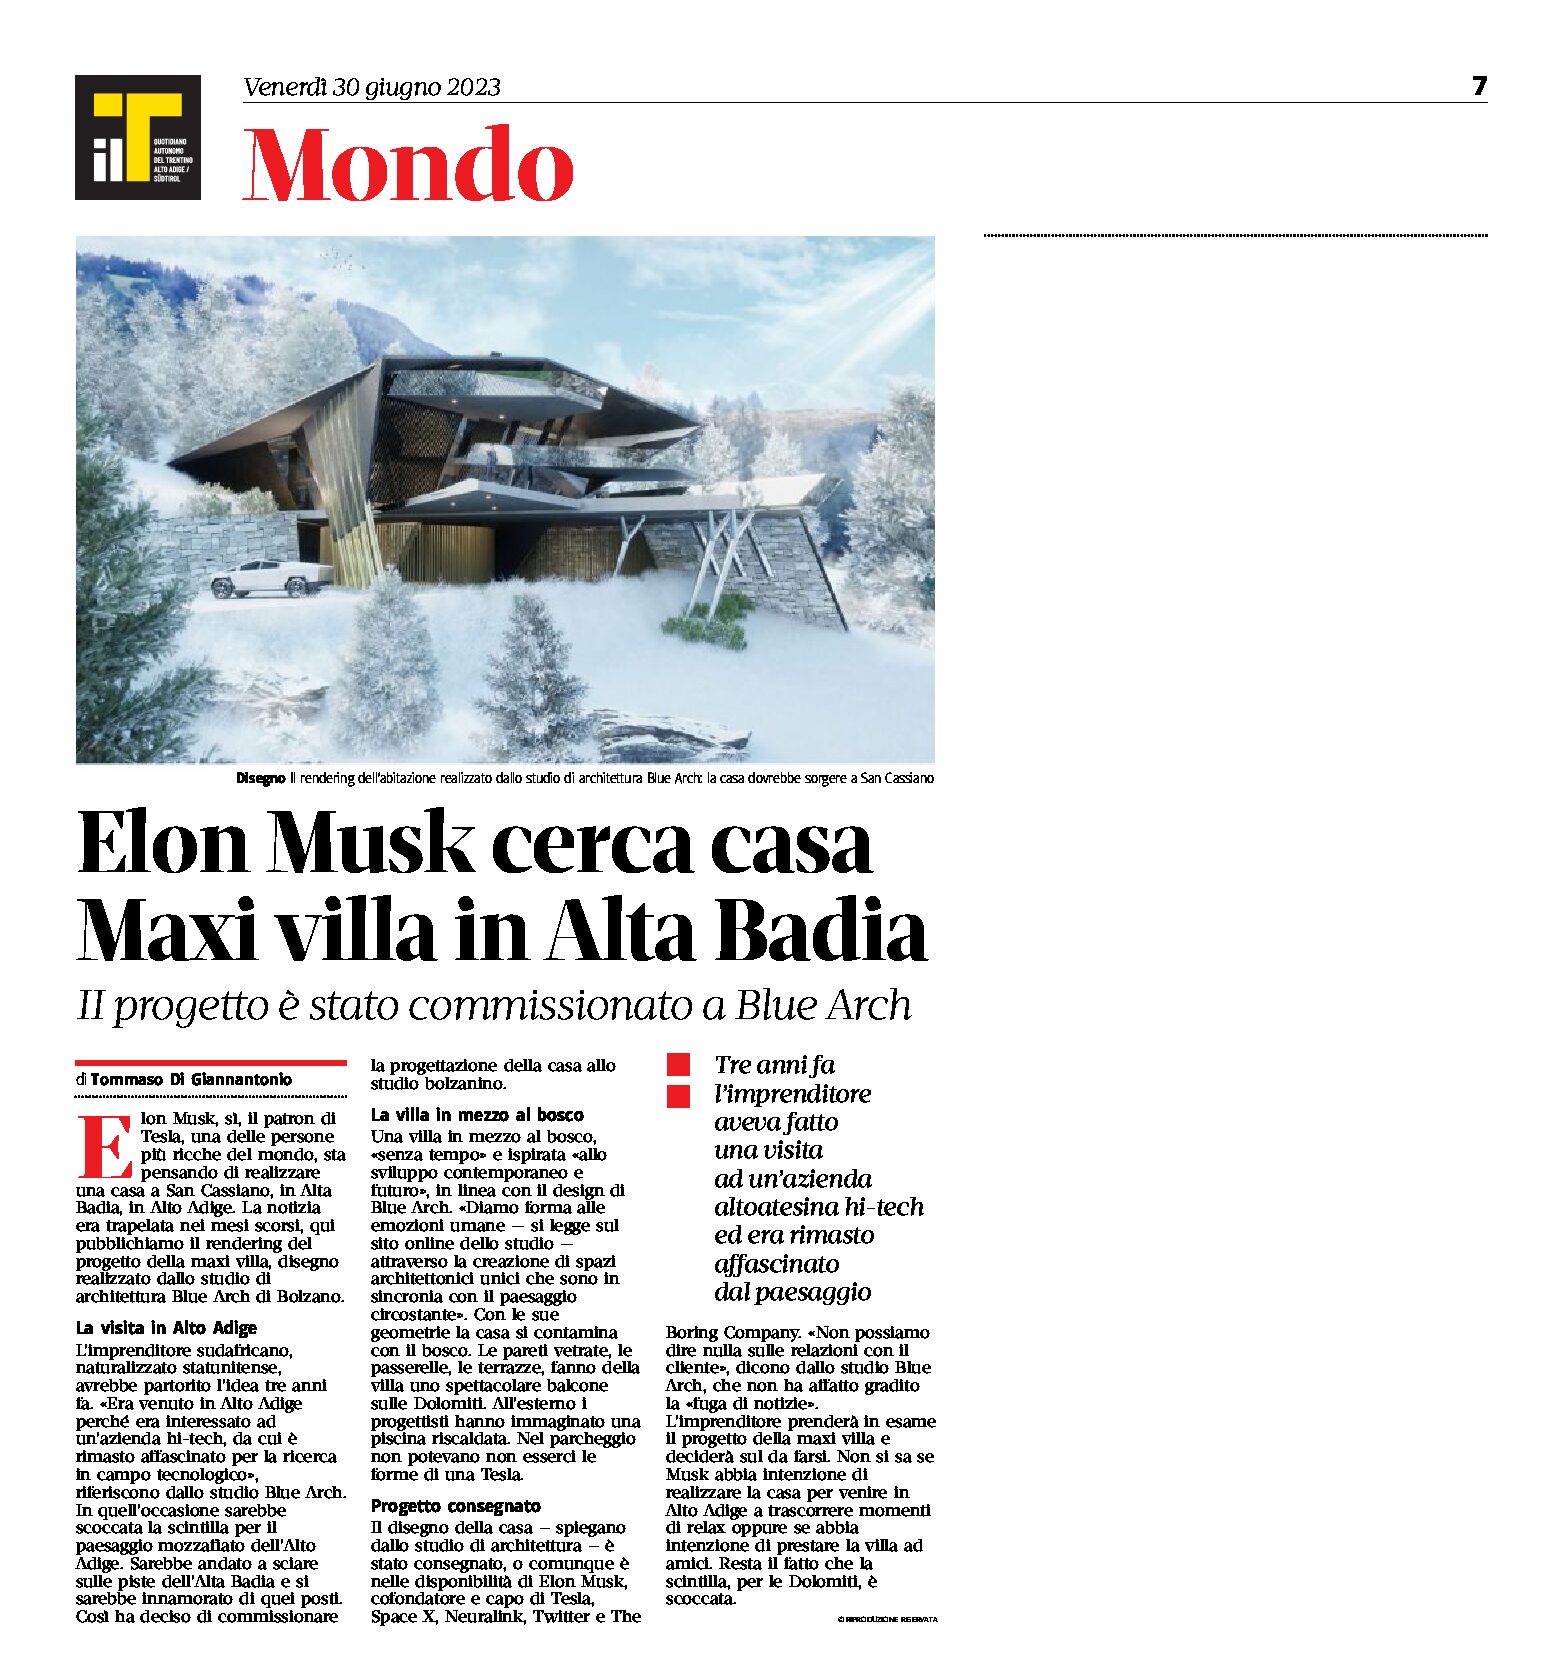 Elon Musk, imprenditore, cerca casa: maxi villa in Alta Badia